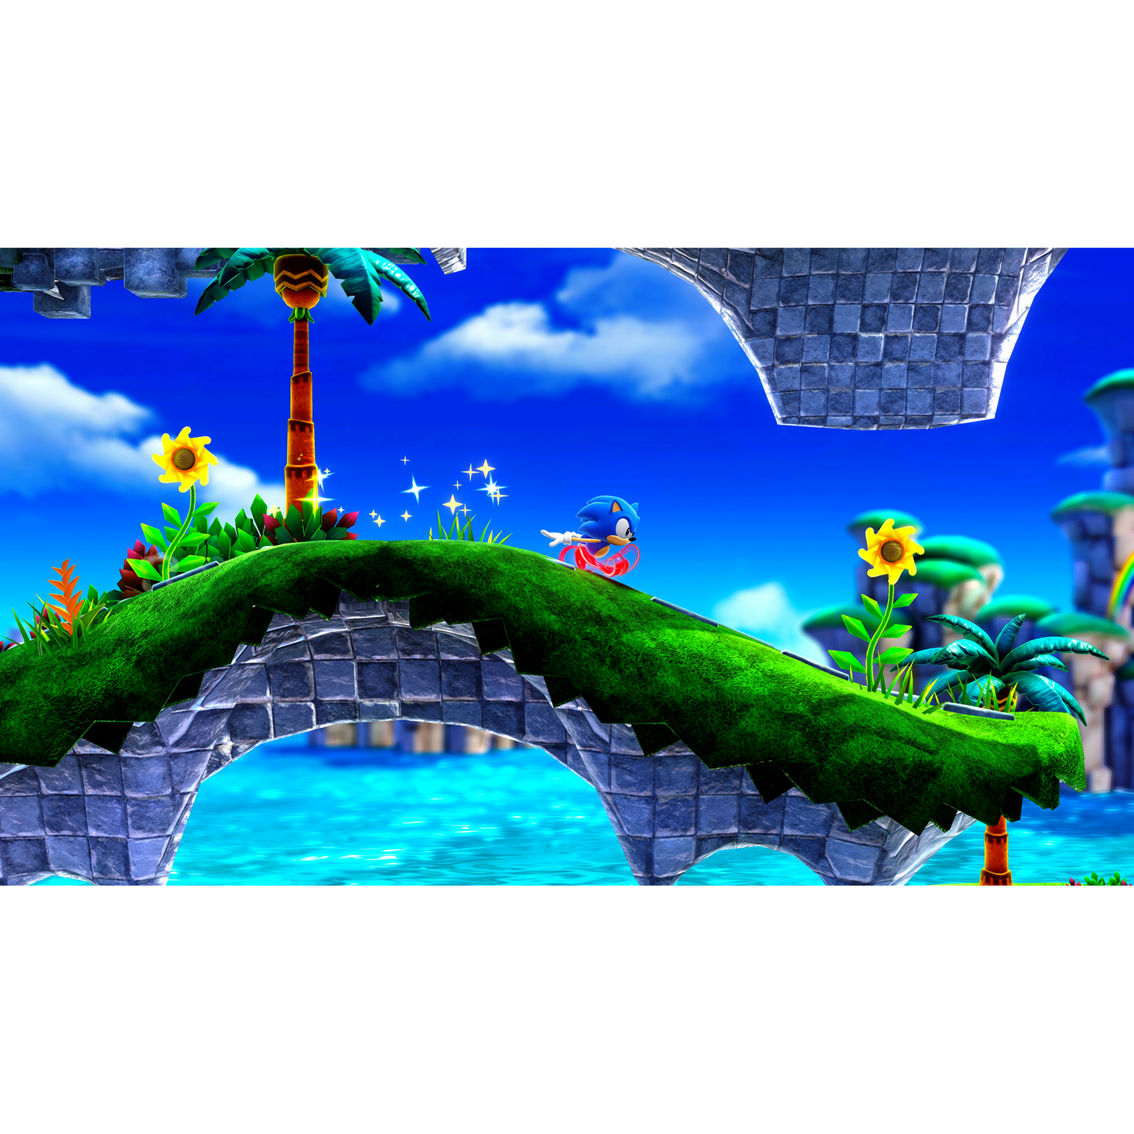 Sonic Superstars (Nintendo Switch) - Image 3 of 6